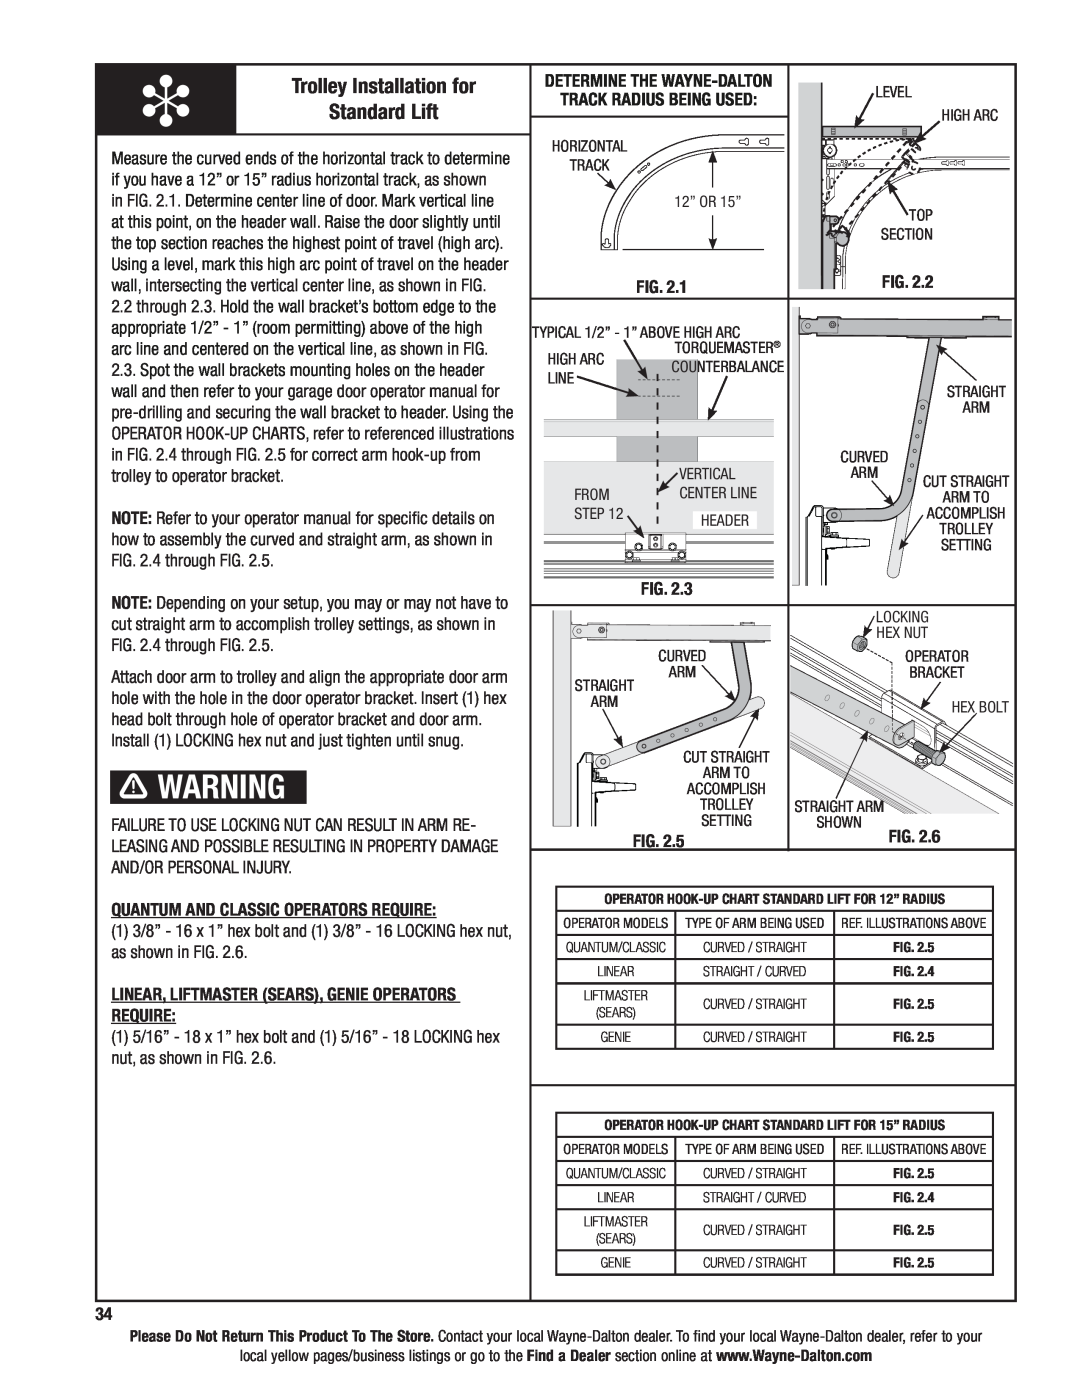 Wayne-Dalton 9600 installation instructions Trolley Installation for, Standard Lift 